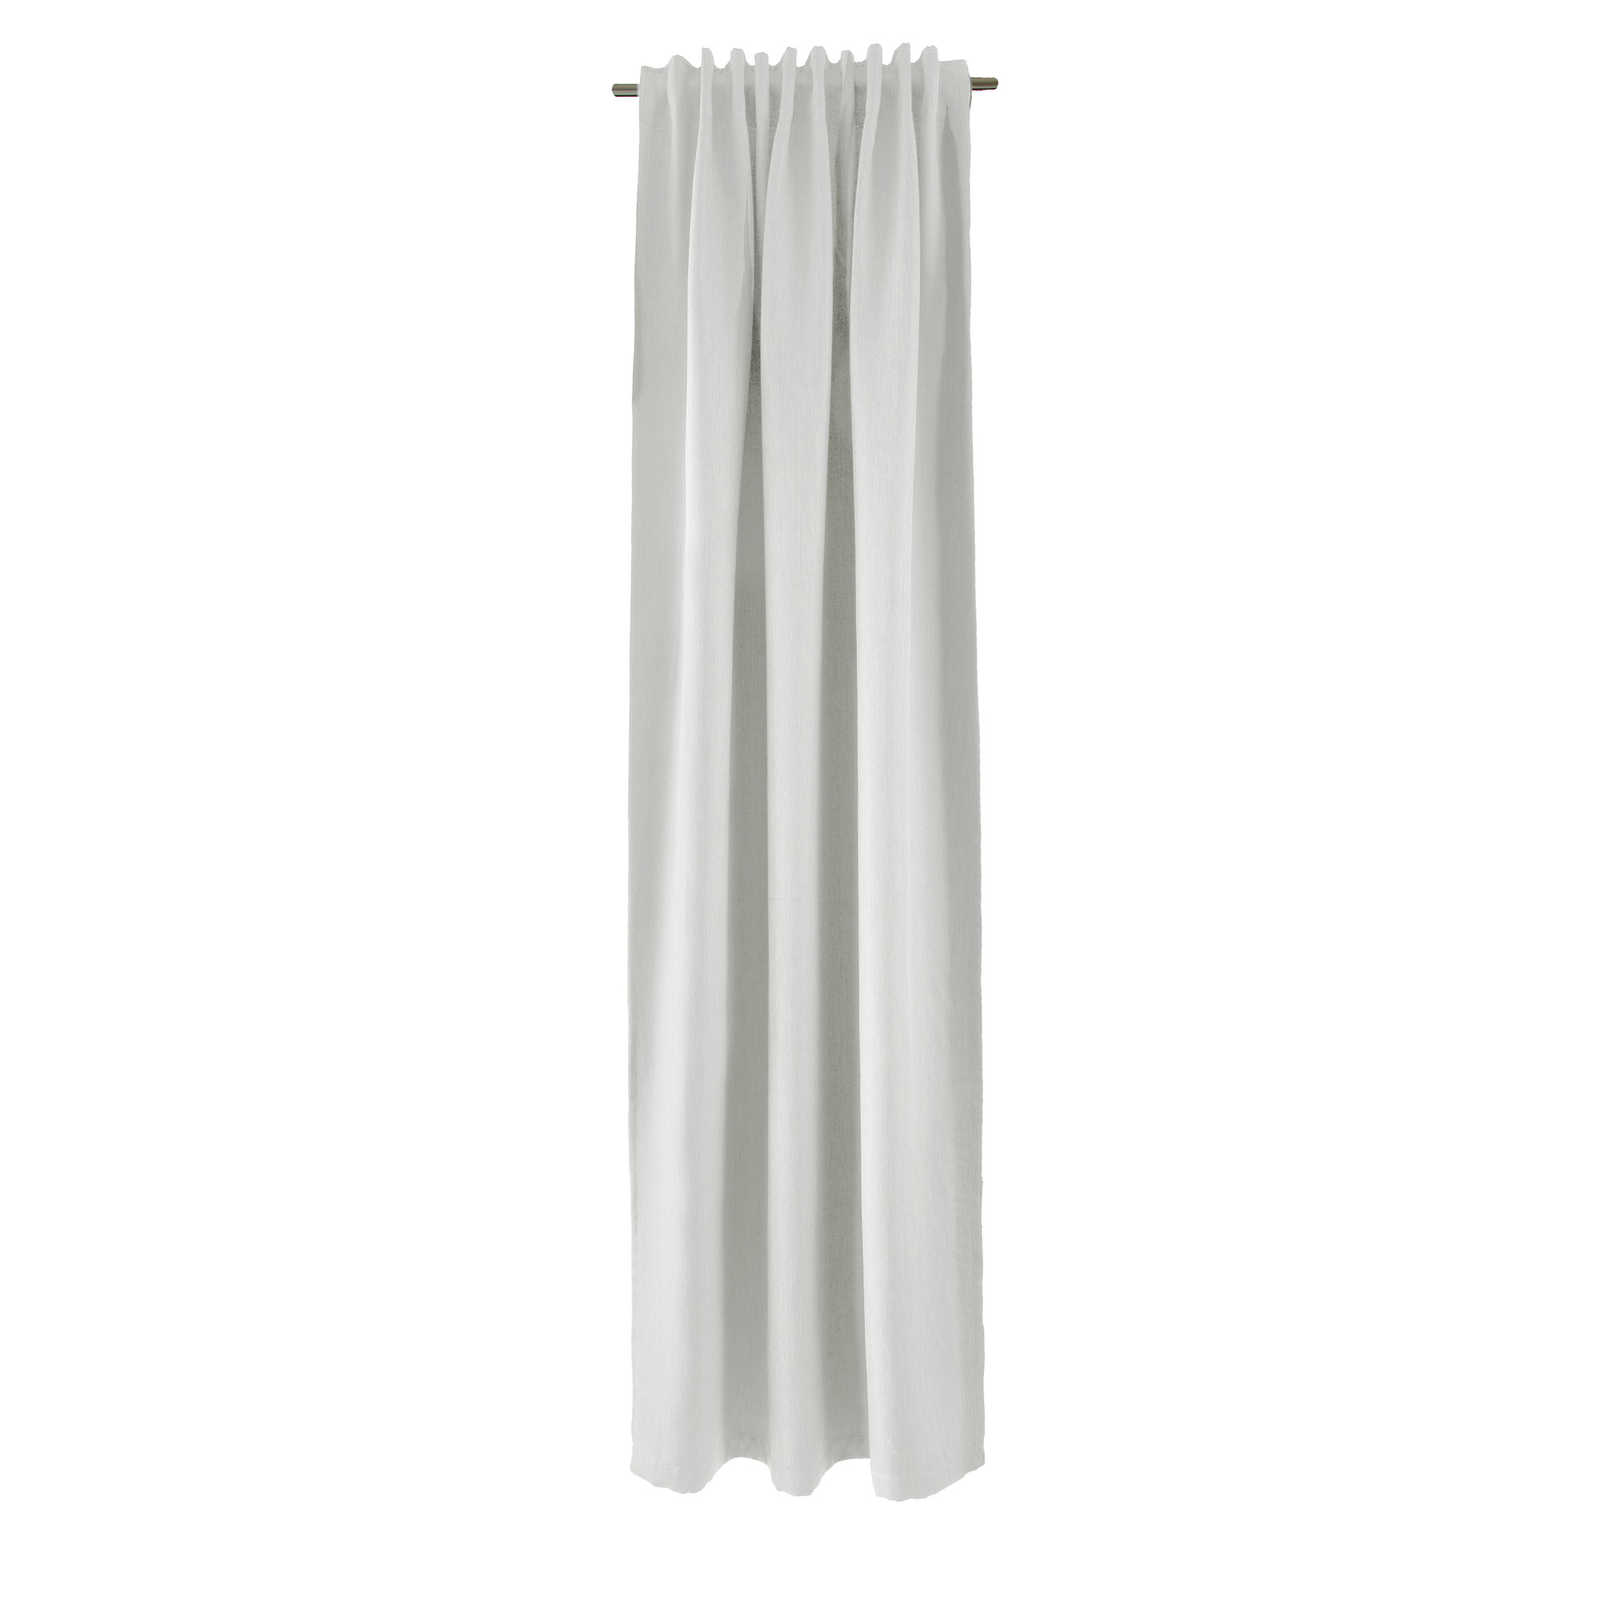 Sciarpa decorativa 140 cm x 245 cm in fibra artificiale bianca
